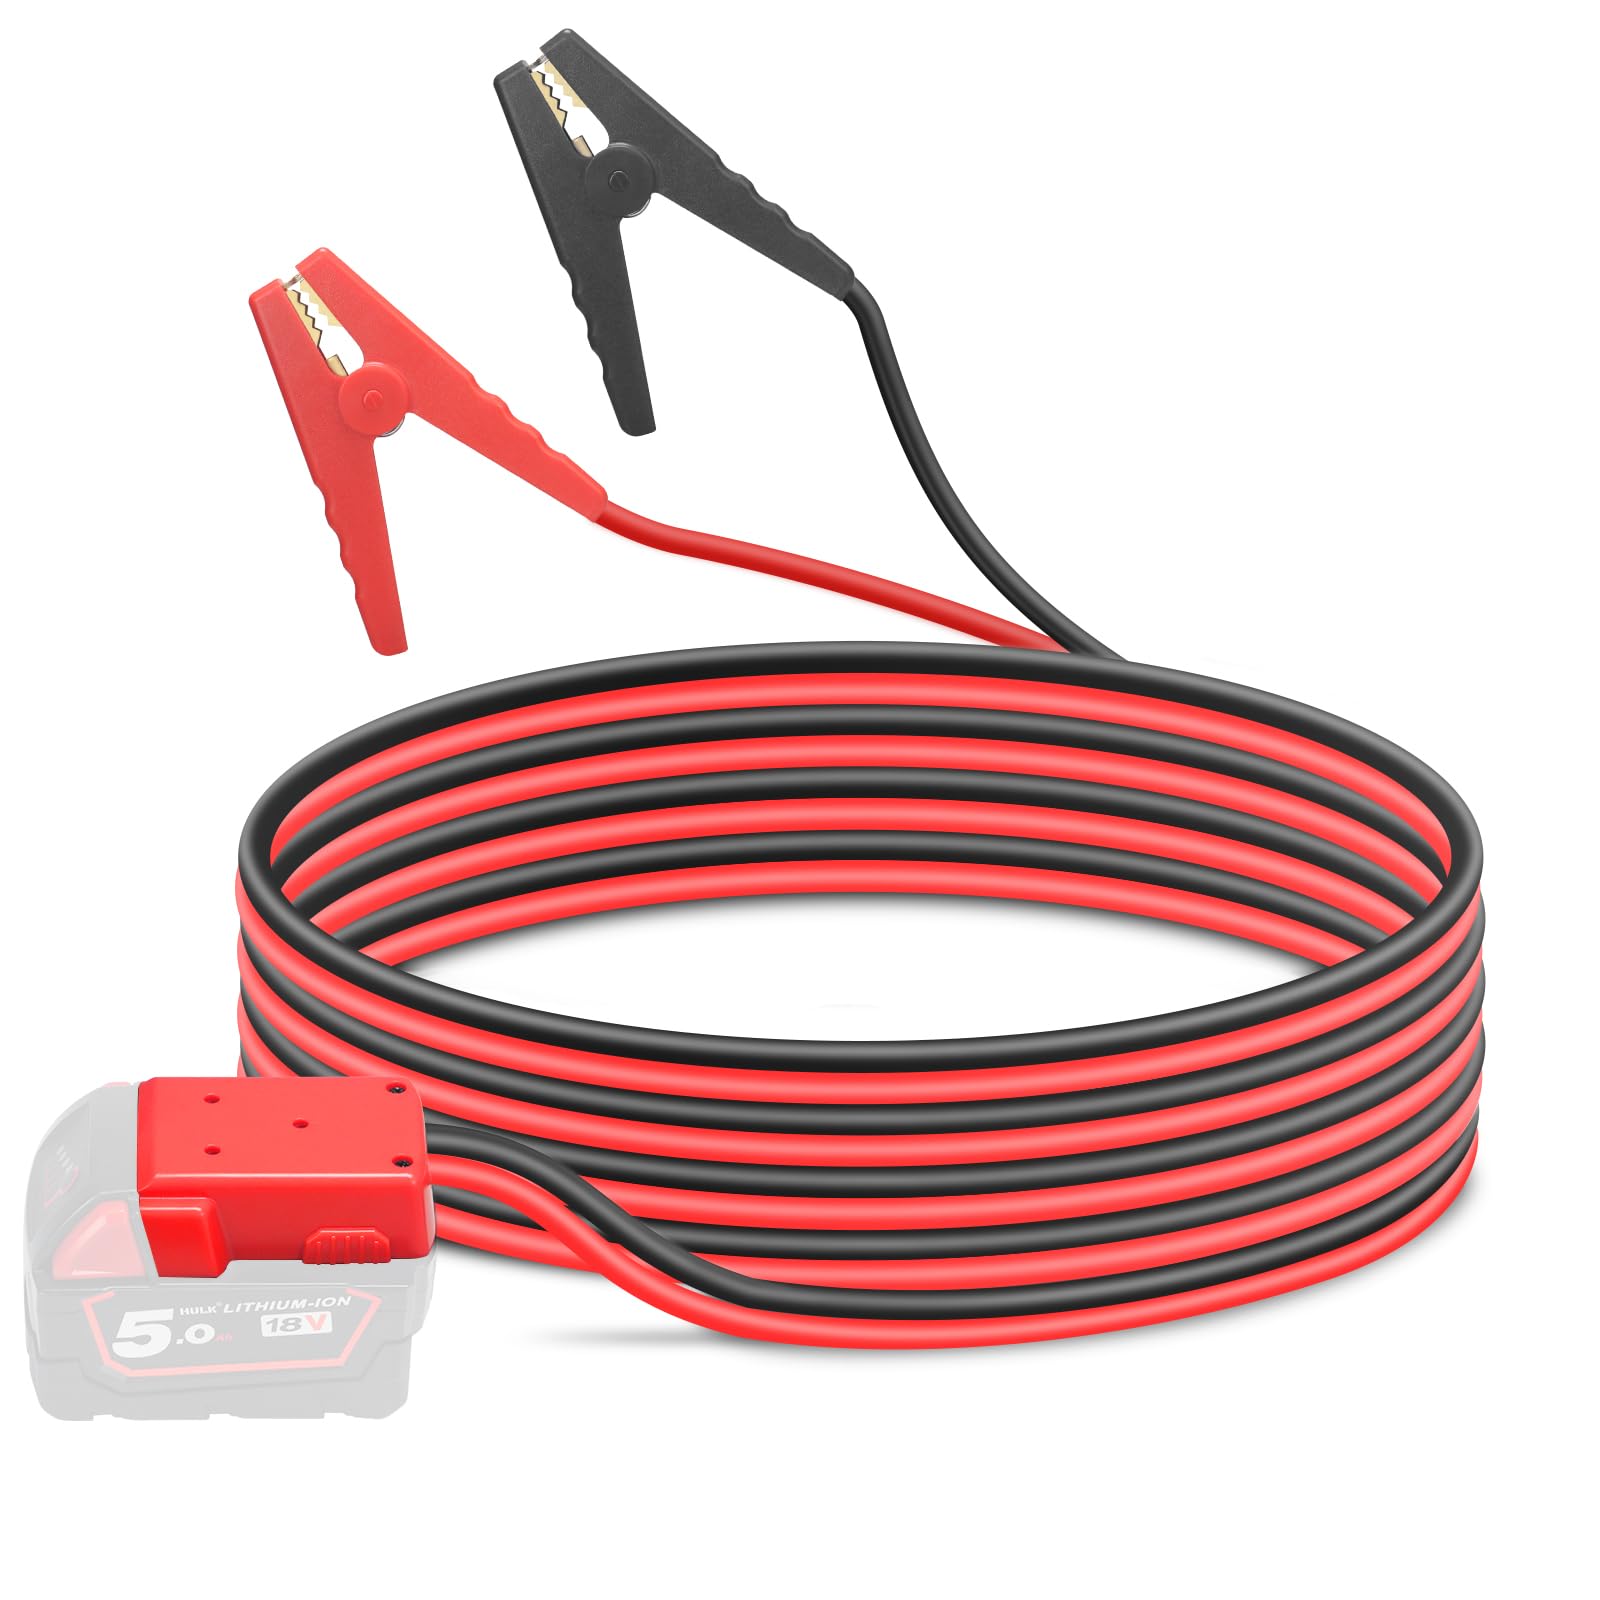 HUGOOME Kabel Power Tool Line, 1.5m 8.37mm² Starthilfekabel Klemmen für Milwaukee BL18 18V Akku-Starter, Automotive Booster Kabel von HUGOOME